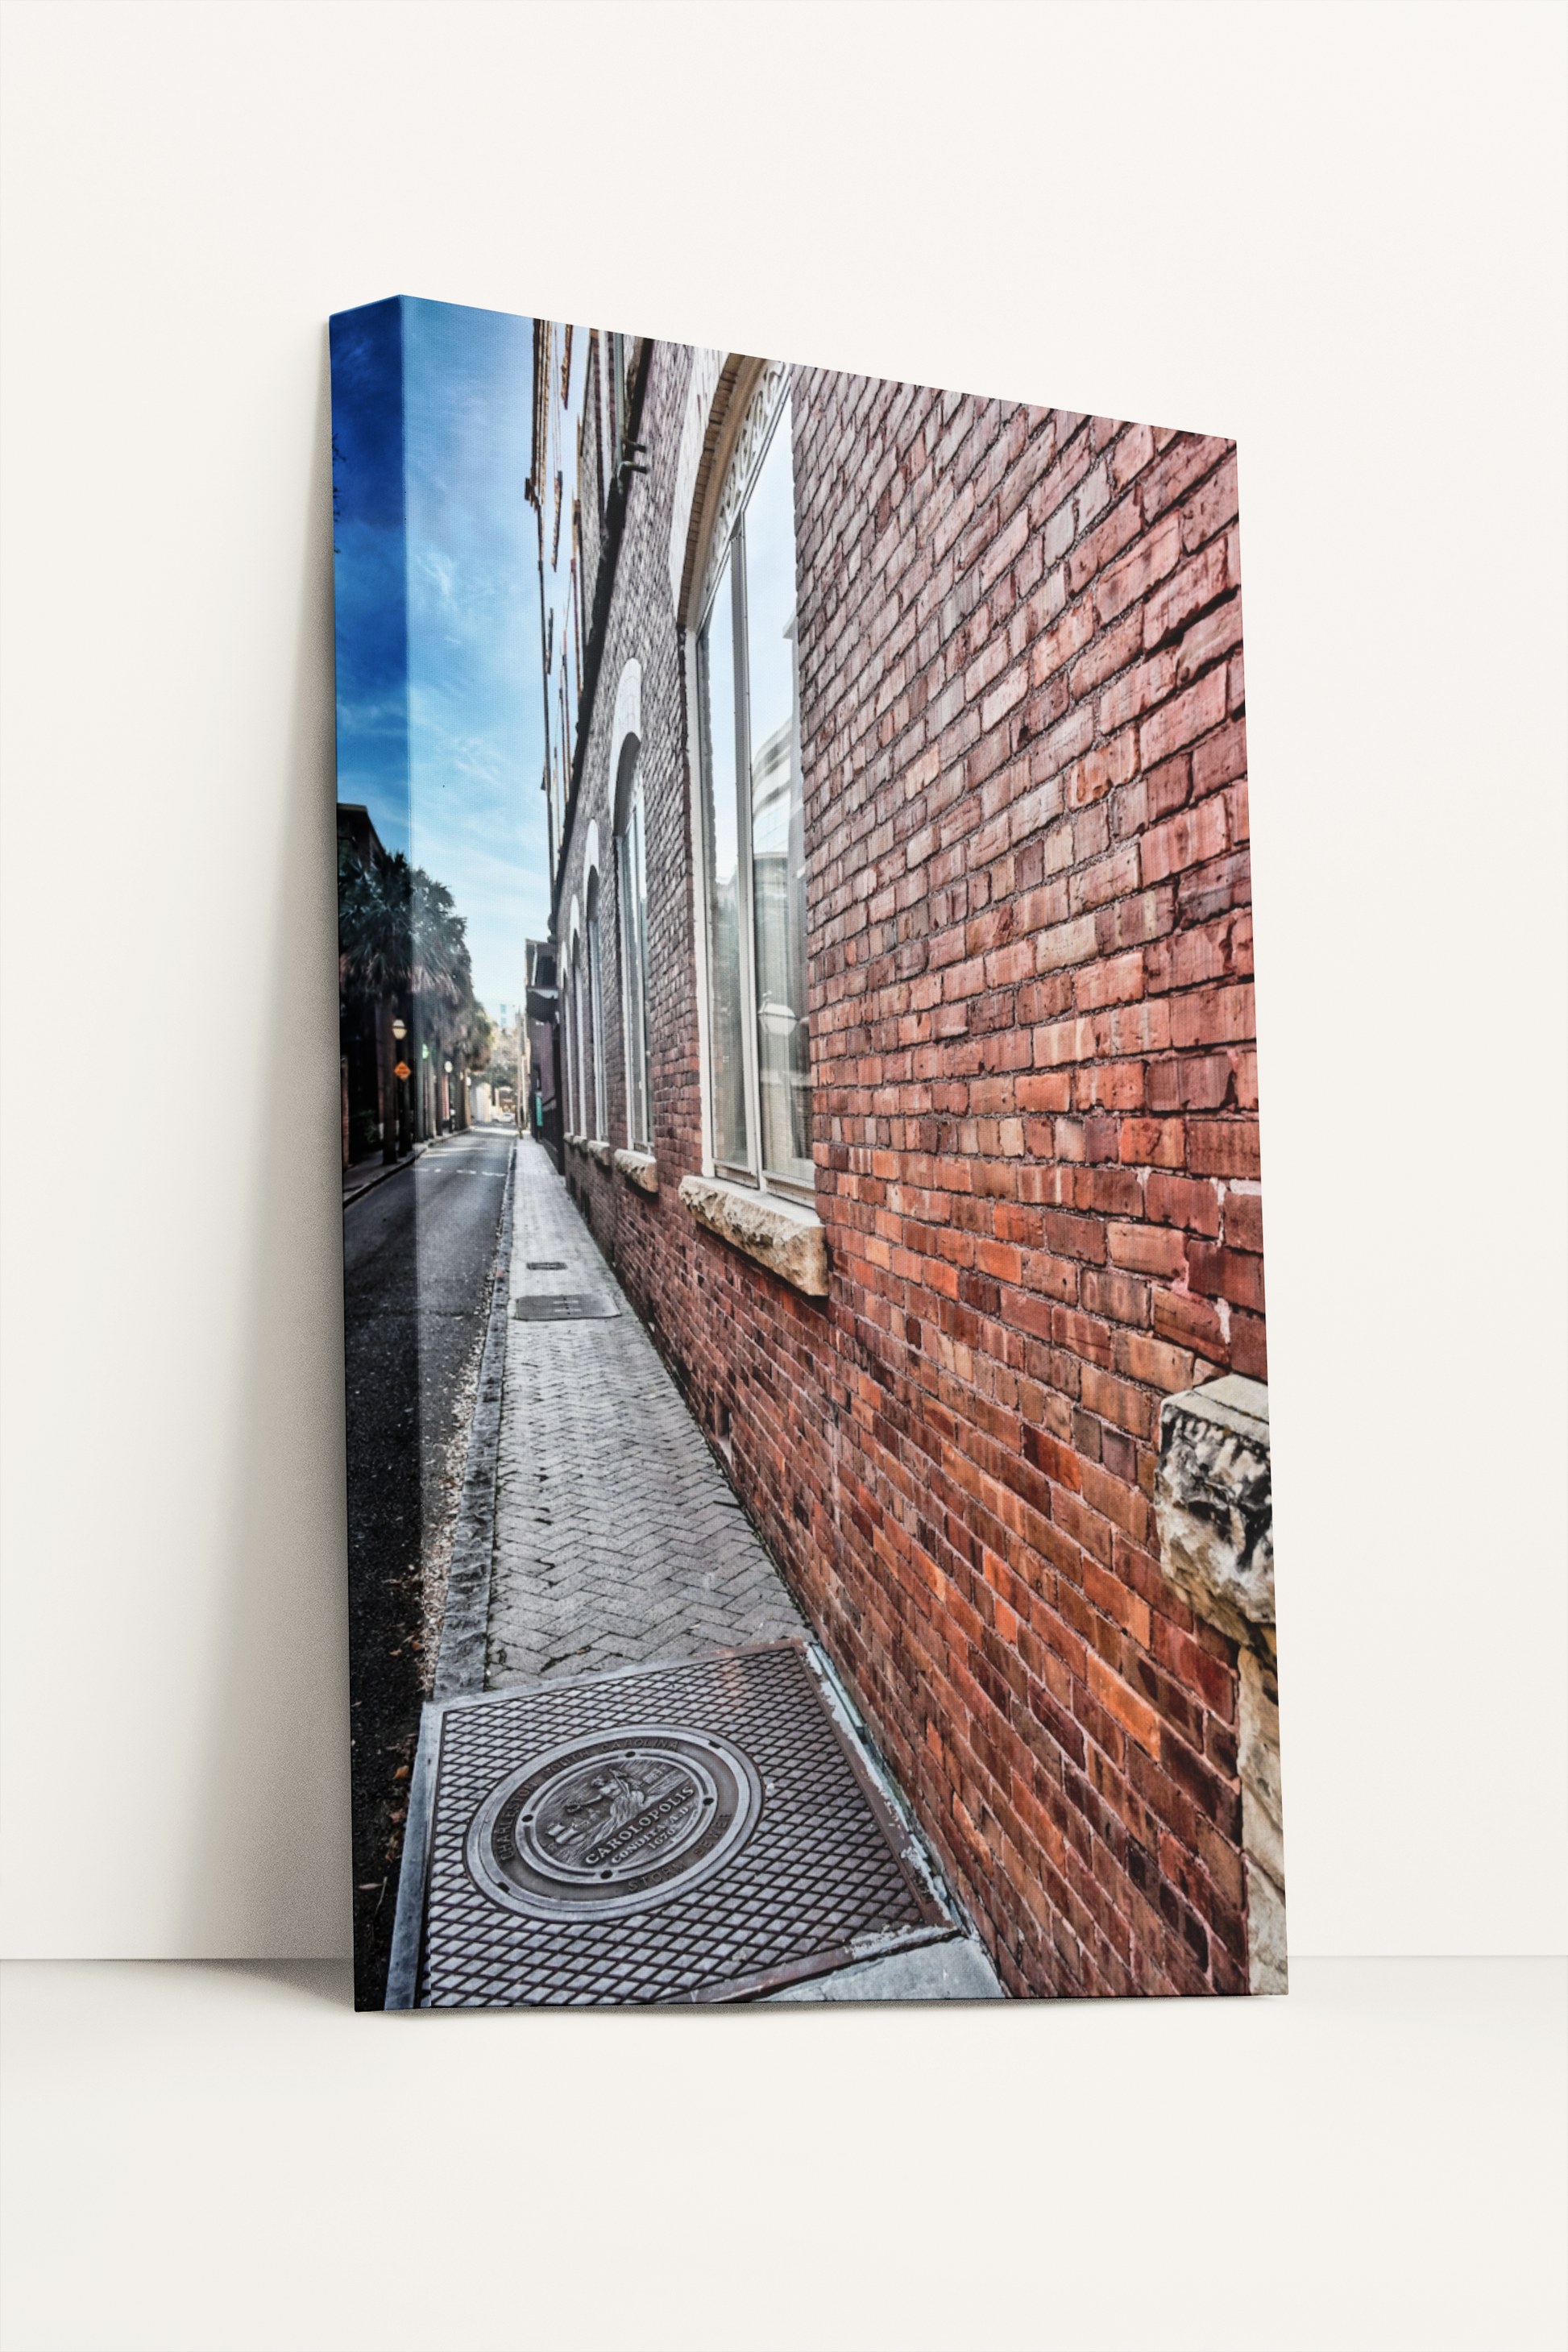 Travel Charleston brick building and cobblestone street photography canvas print